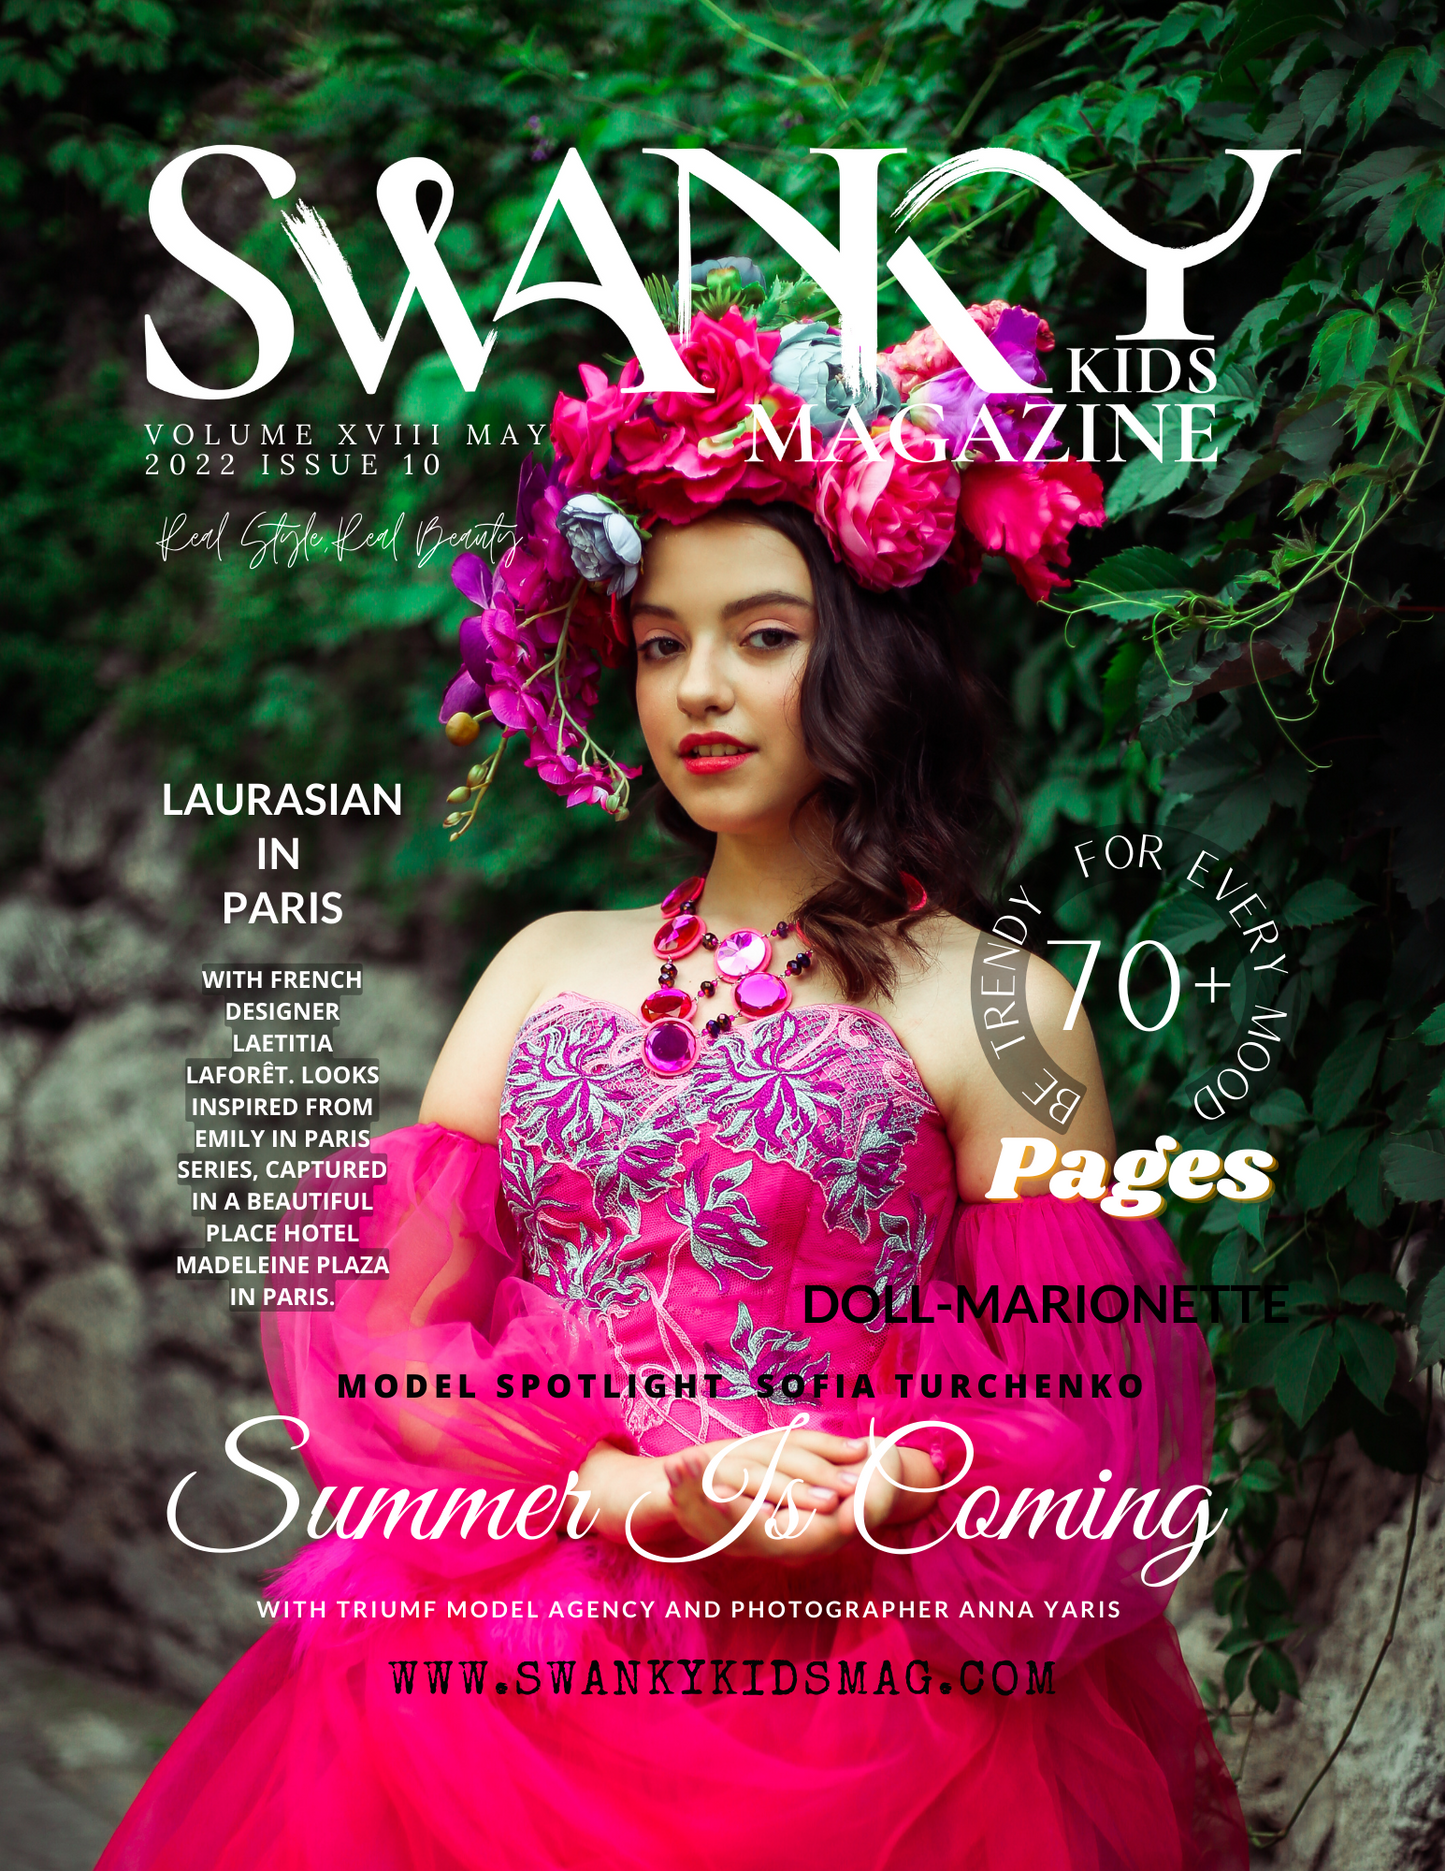 Swanky Kids Magazine MAY 2022 VOL XVIII Issue 10